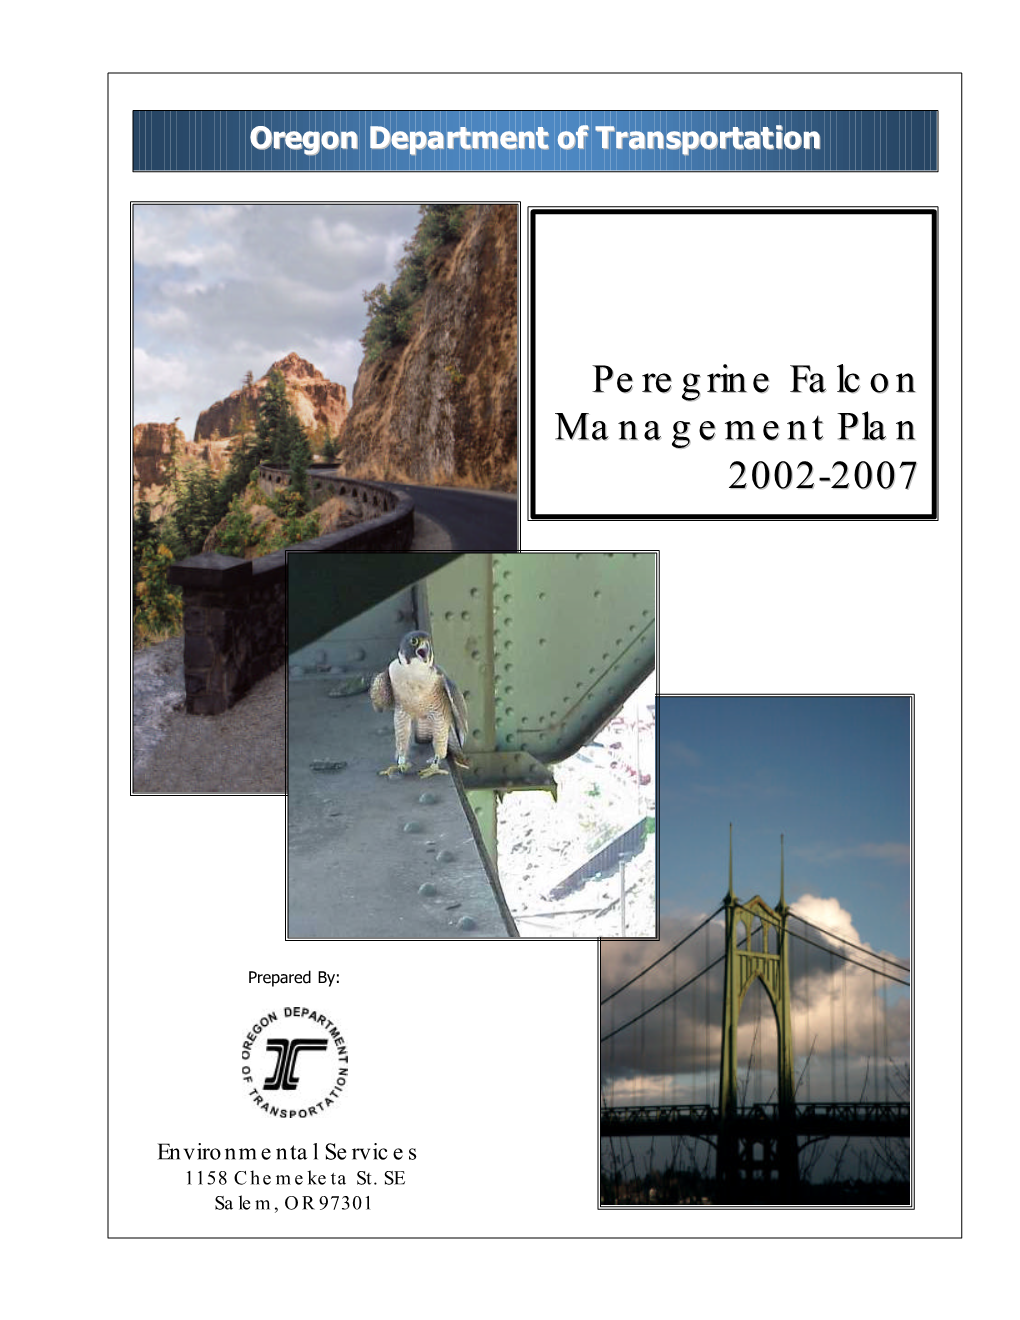 Peregrine Falcon Management Plan 2002-2007